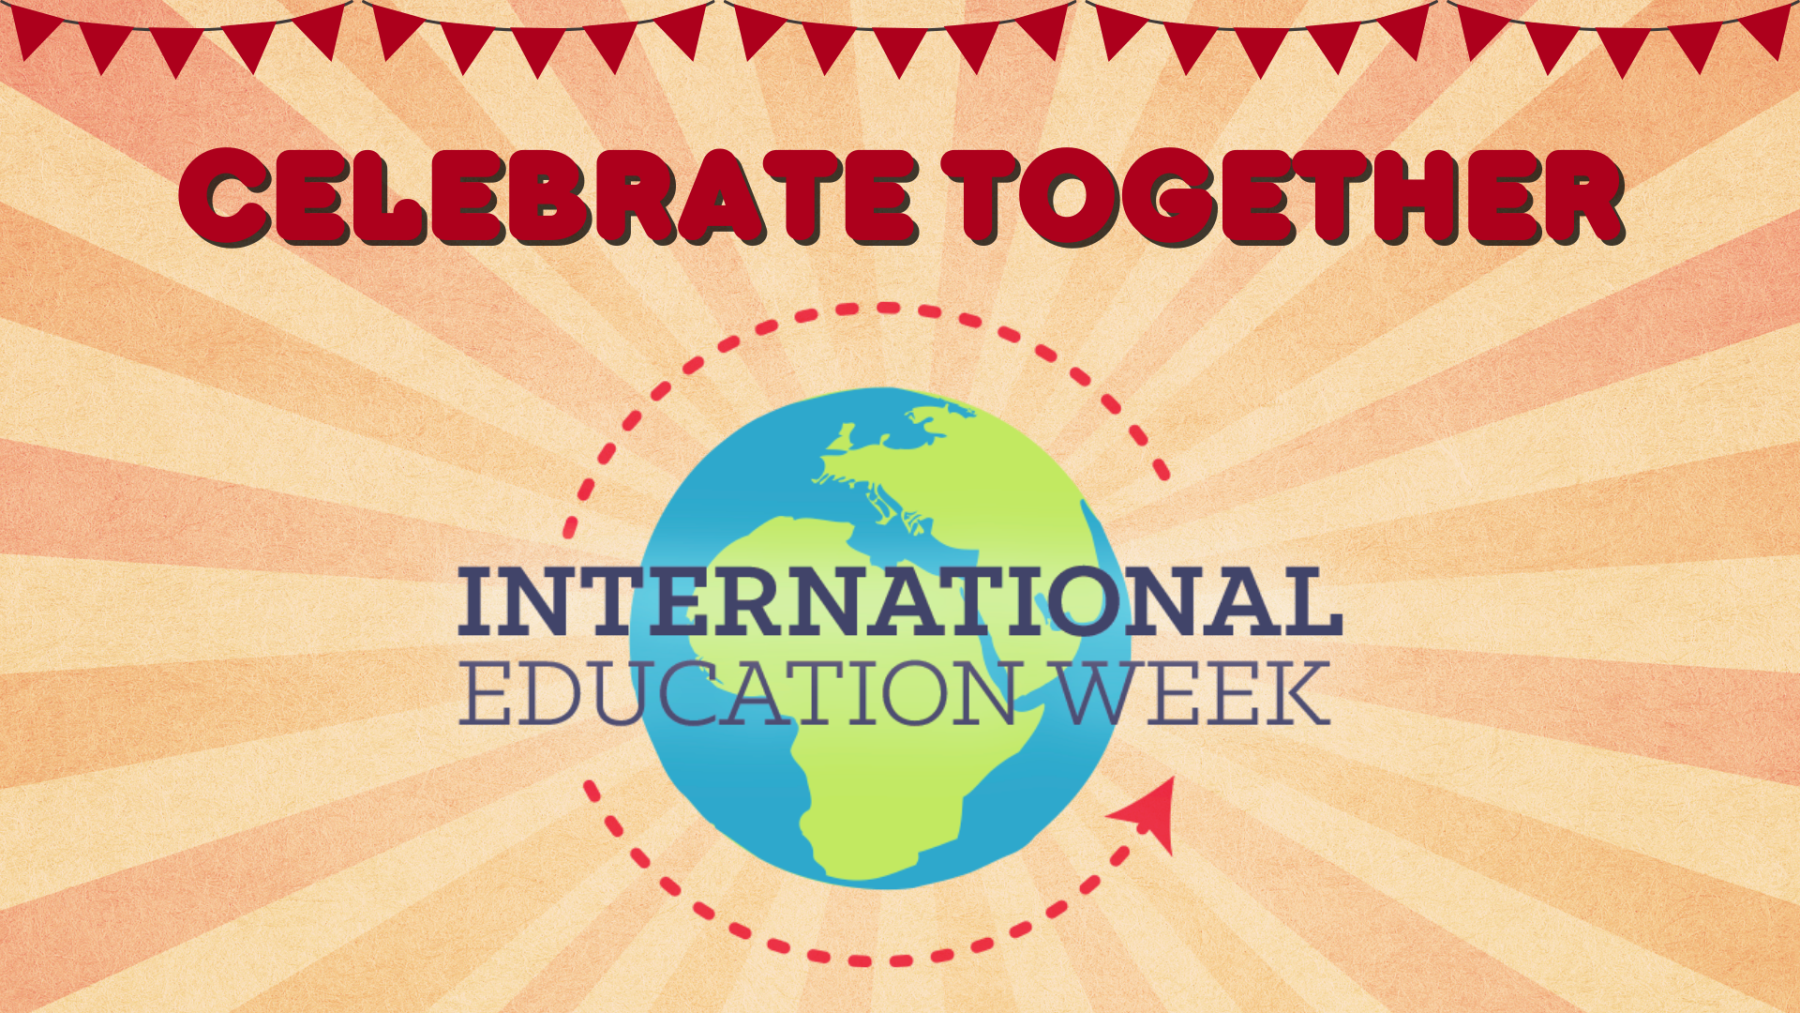 International Education Week Poster "Celebrate Together"